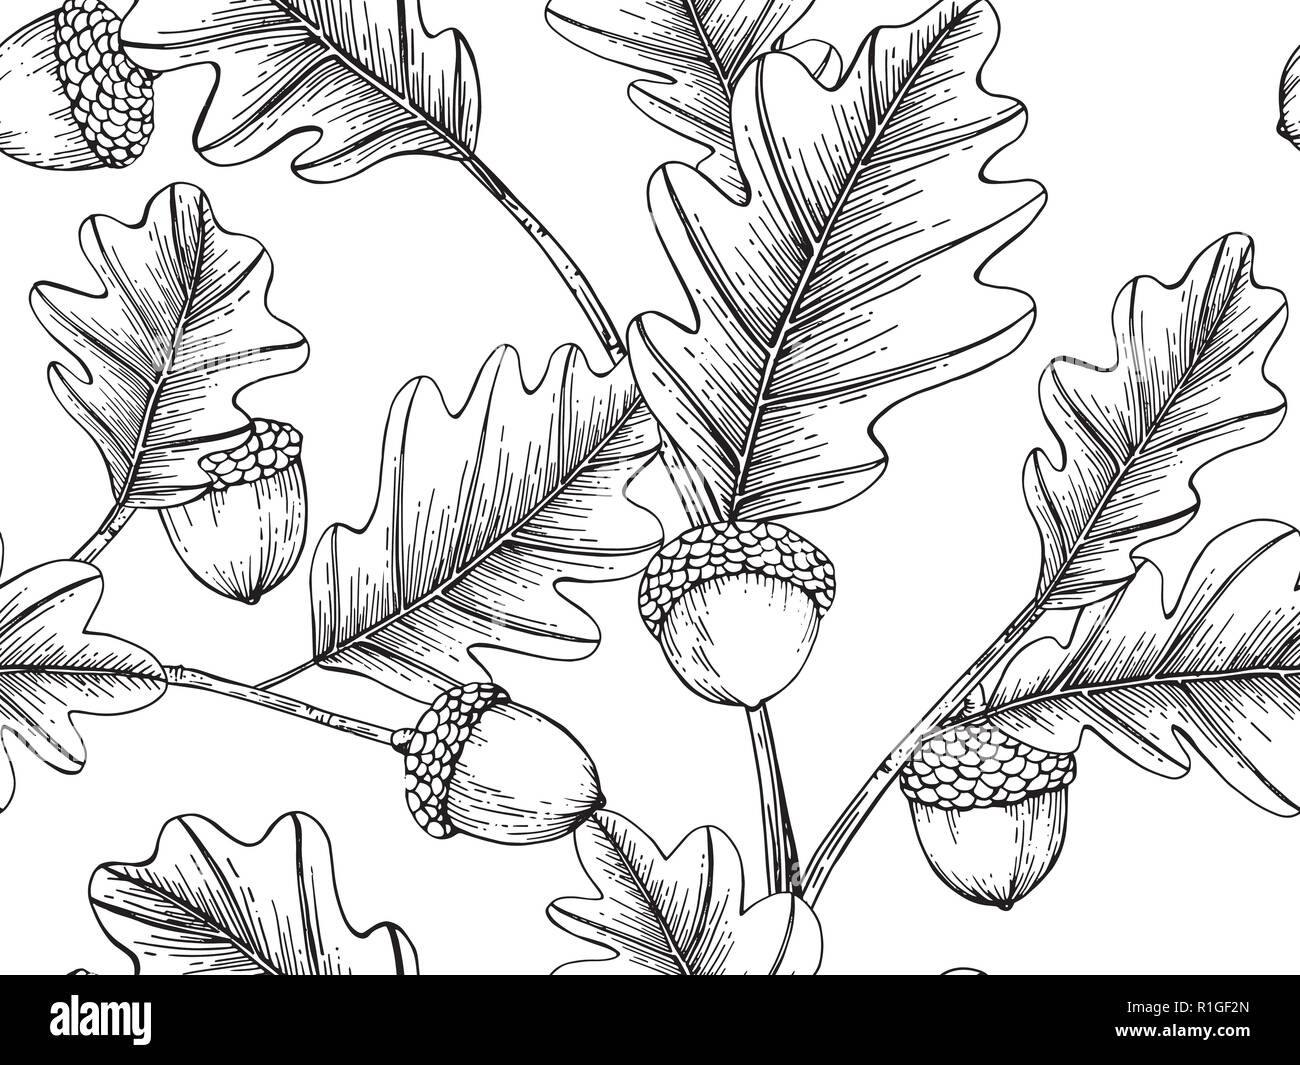 Oak leaf drawing illustration by hand drawn line art. Stock Vector